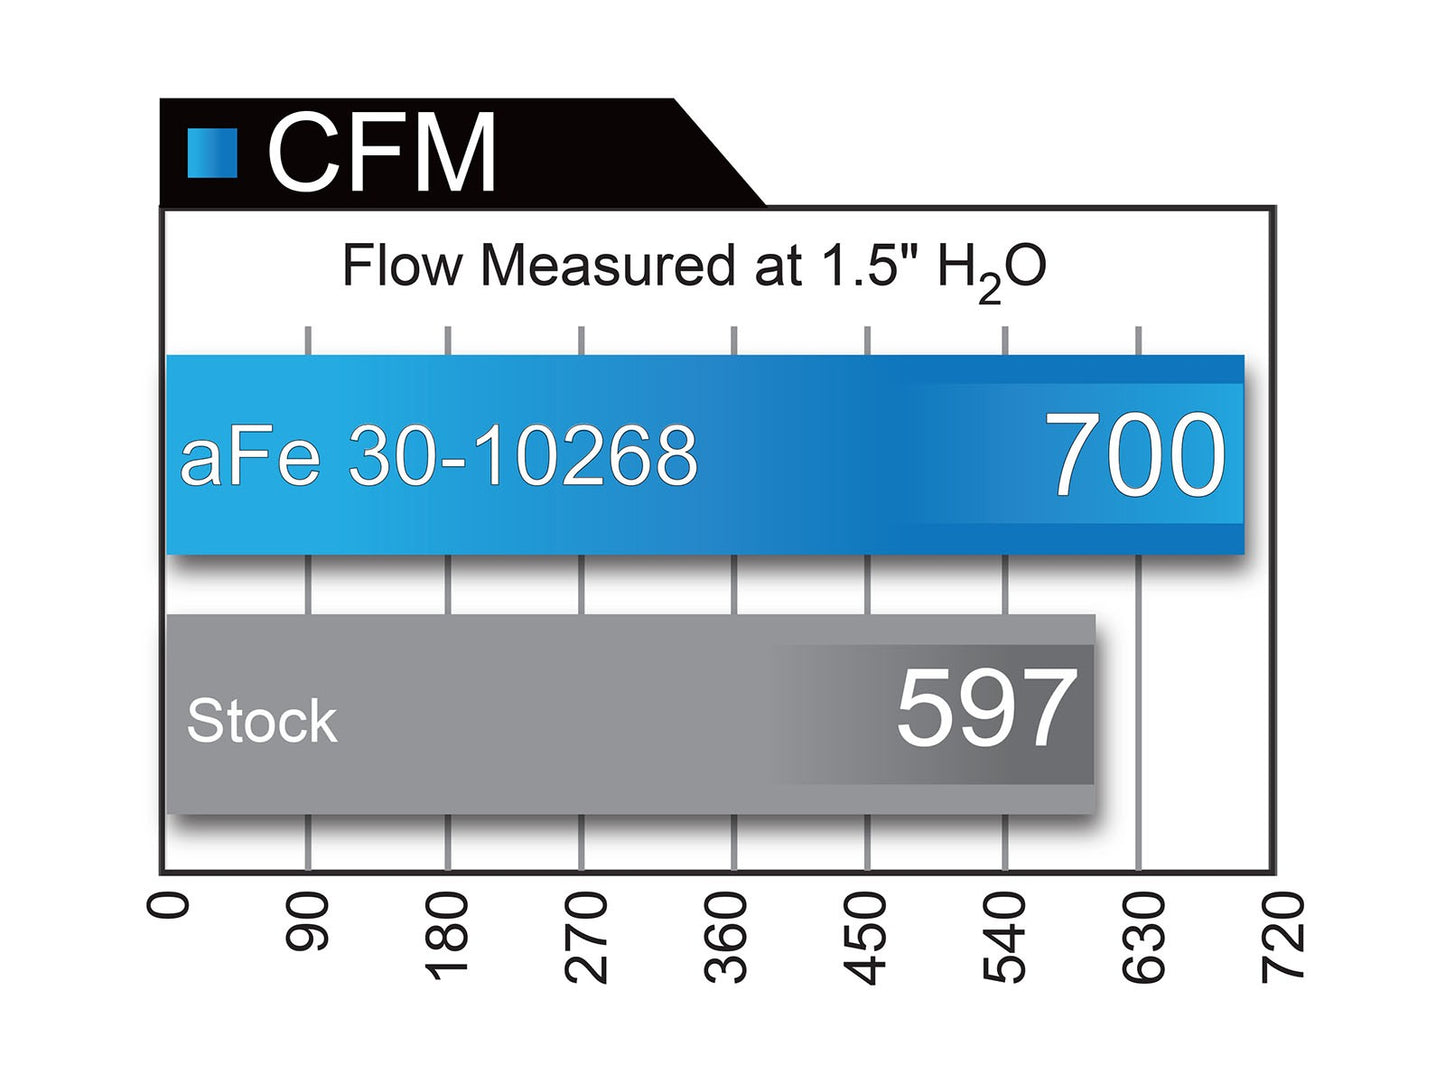 Magnum FLOW Pro 5R Air Filter